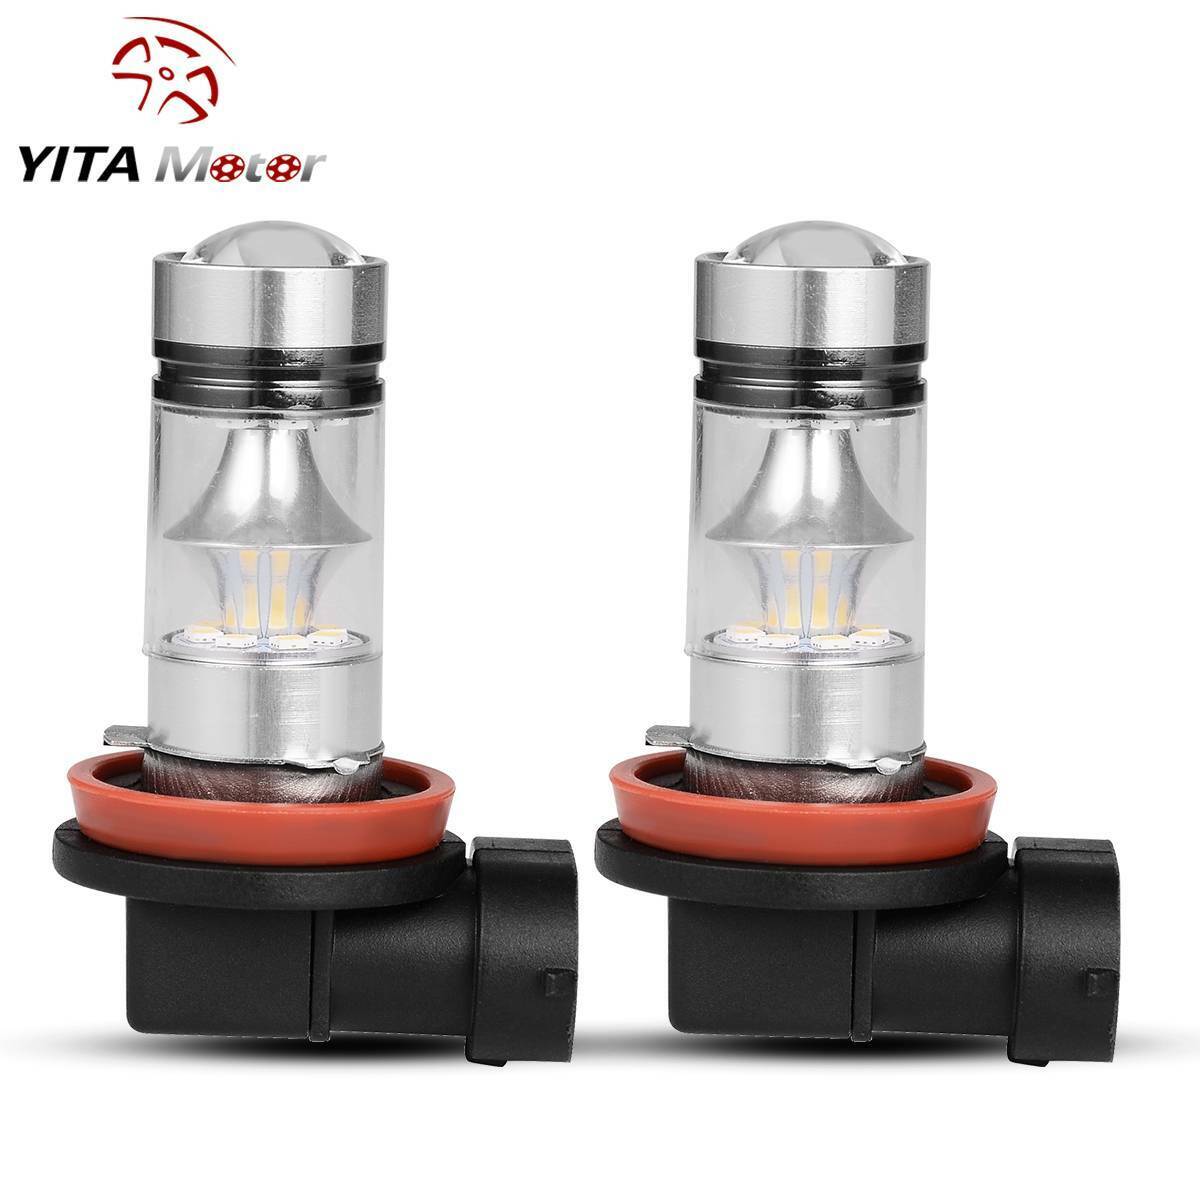 YITAMOTOR H11 H8 H16 High Power 100W LED Fog Light Driving Bulbs 6000K White 2x